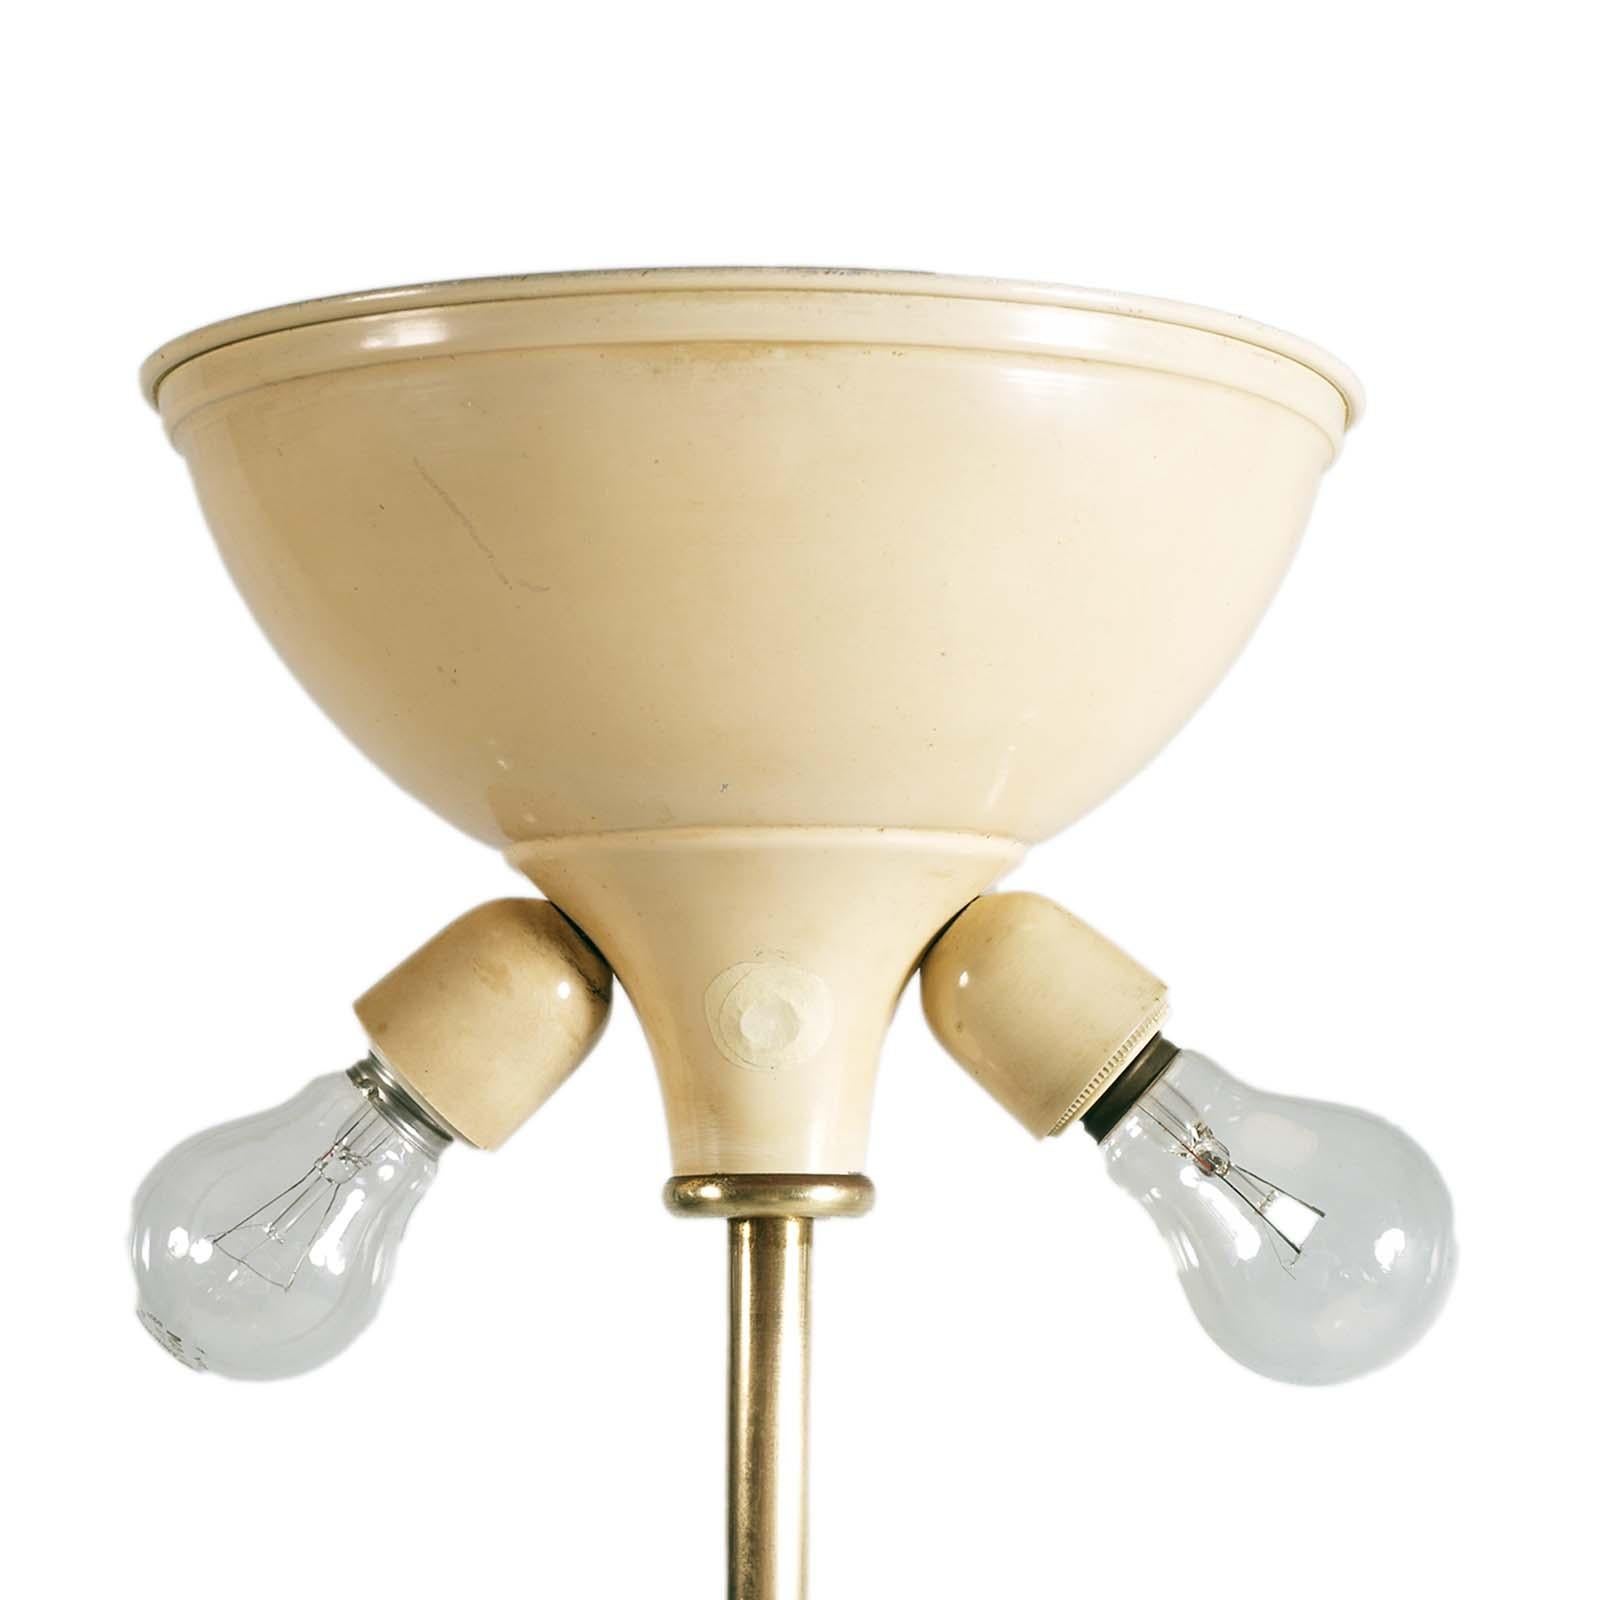 Gilt art deco floor lamp model Florence 1920s brass  gilded by Ghidini1849 For Sale